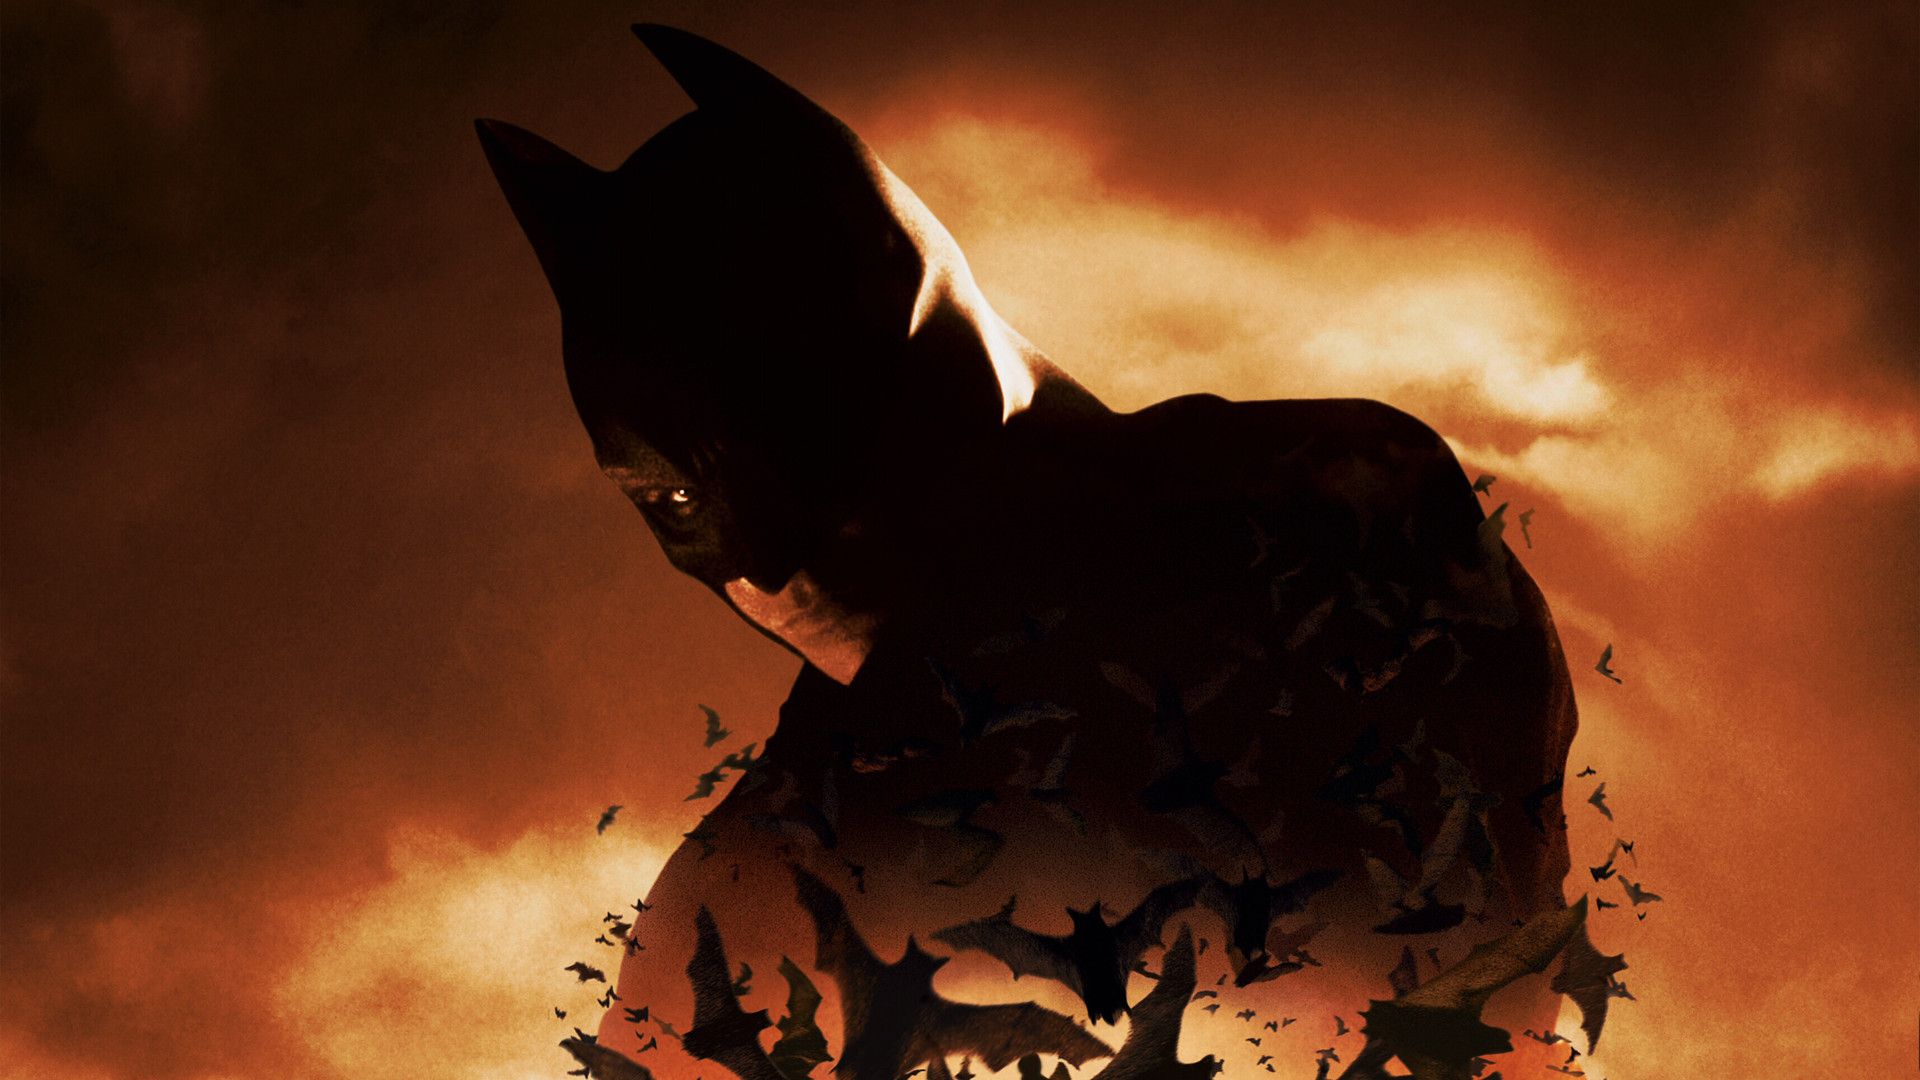 BATMAN BEGINS superhero f wallpaper | 1920x1080 | 101464 | WallpaperUP